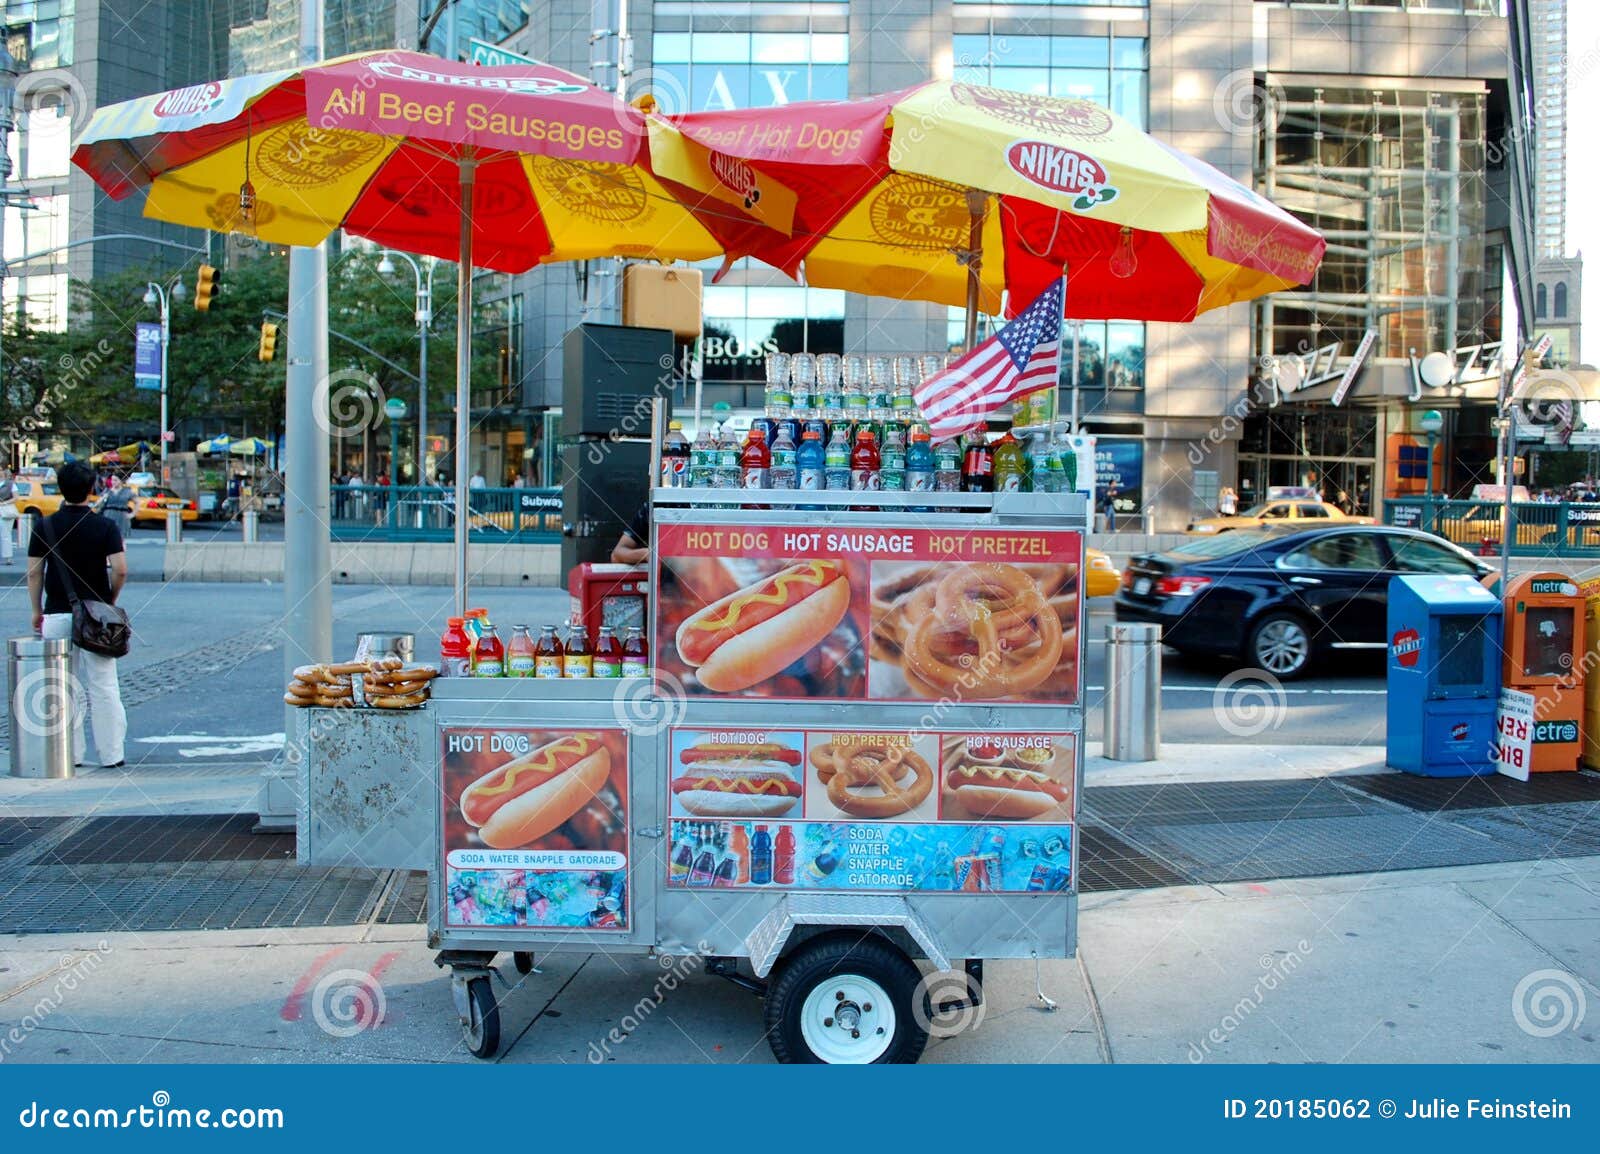 new-york-city-hot-dog-cart-20185062.jpg